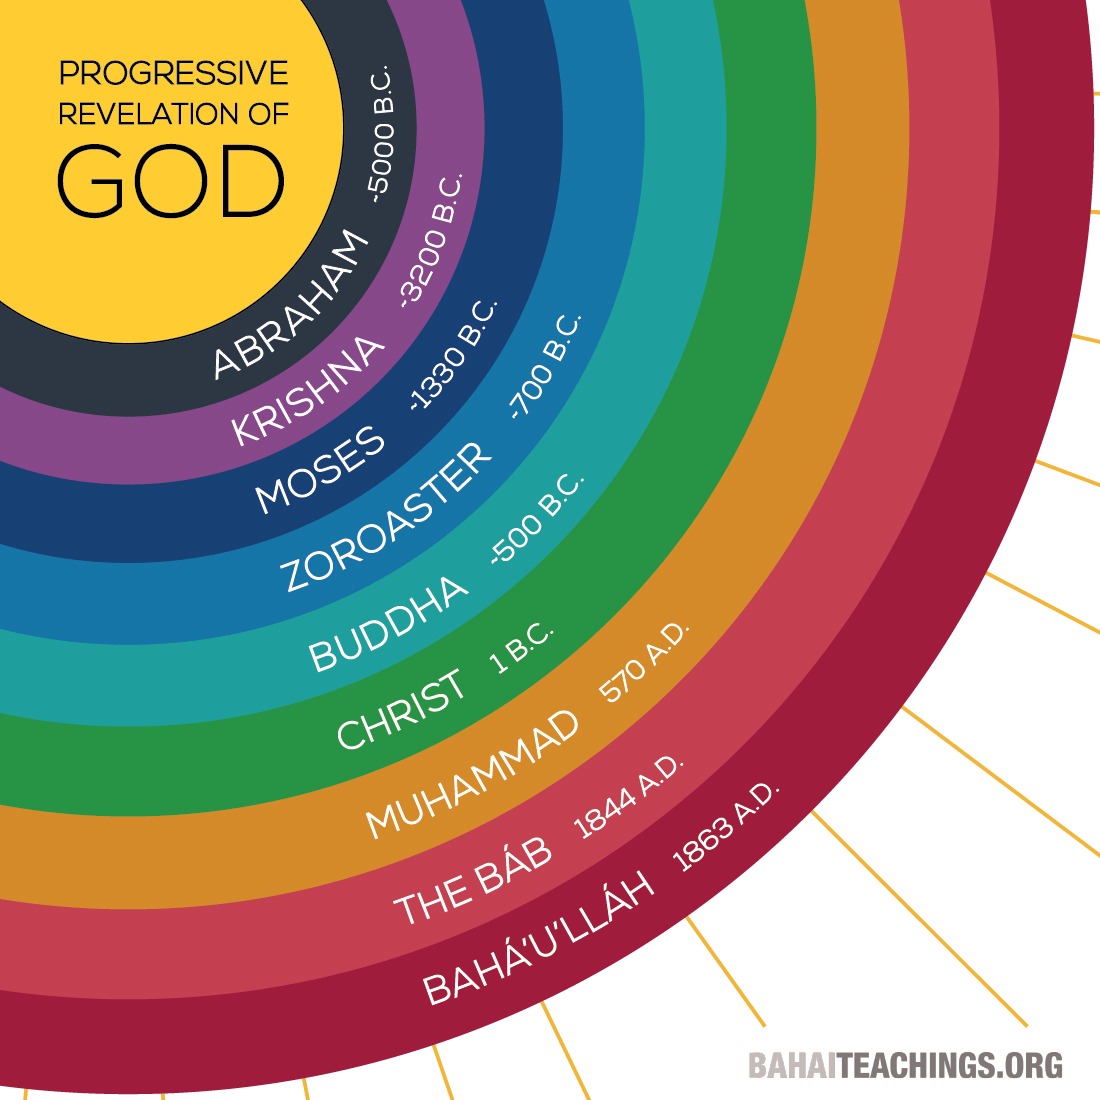 A pie chart of progressive revelation of God